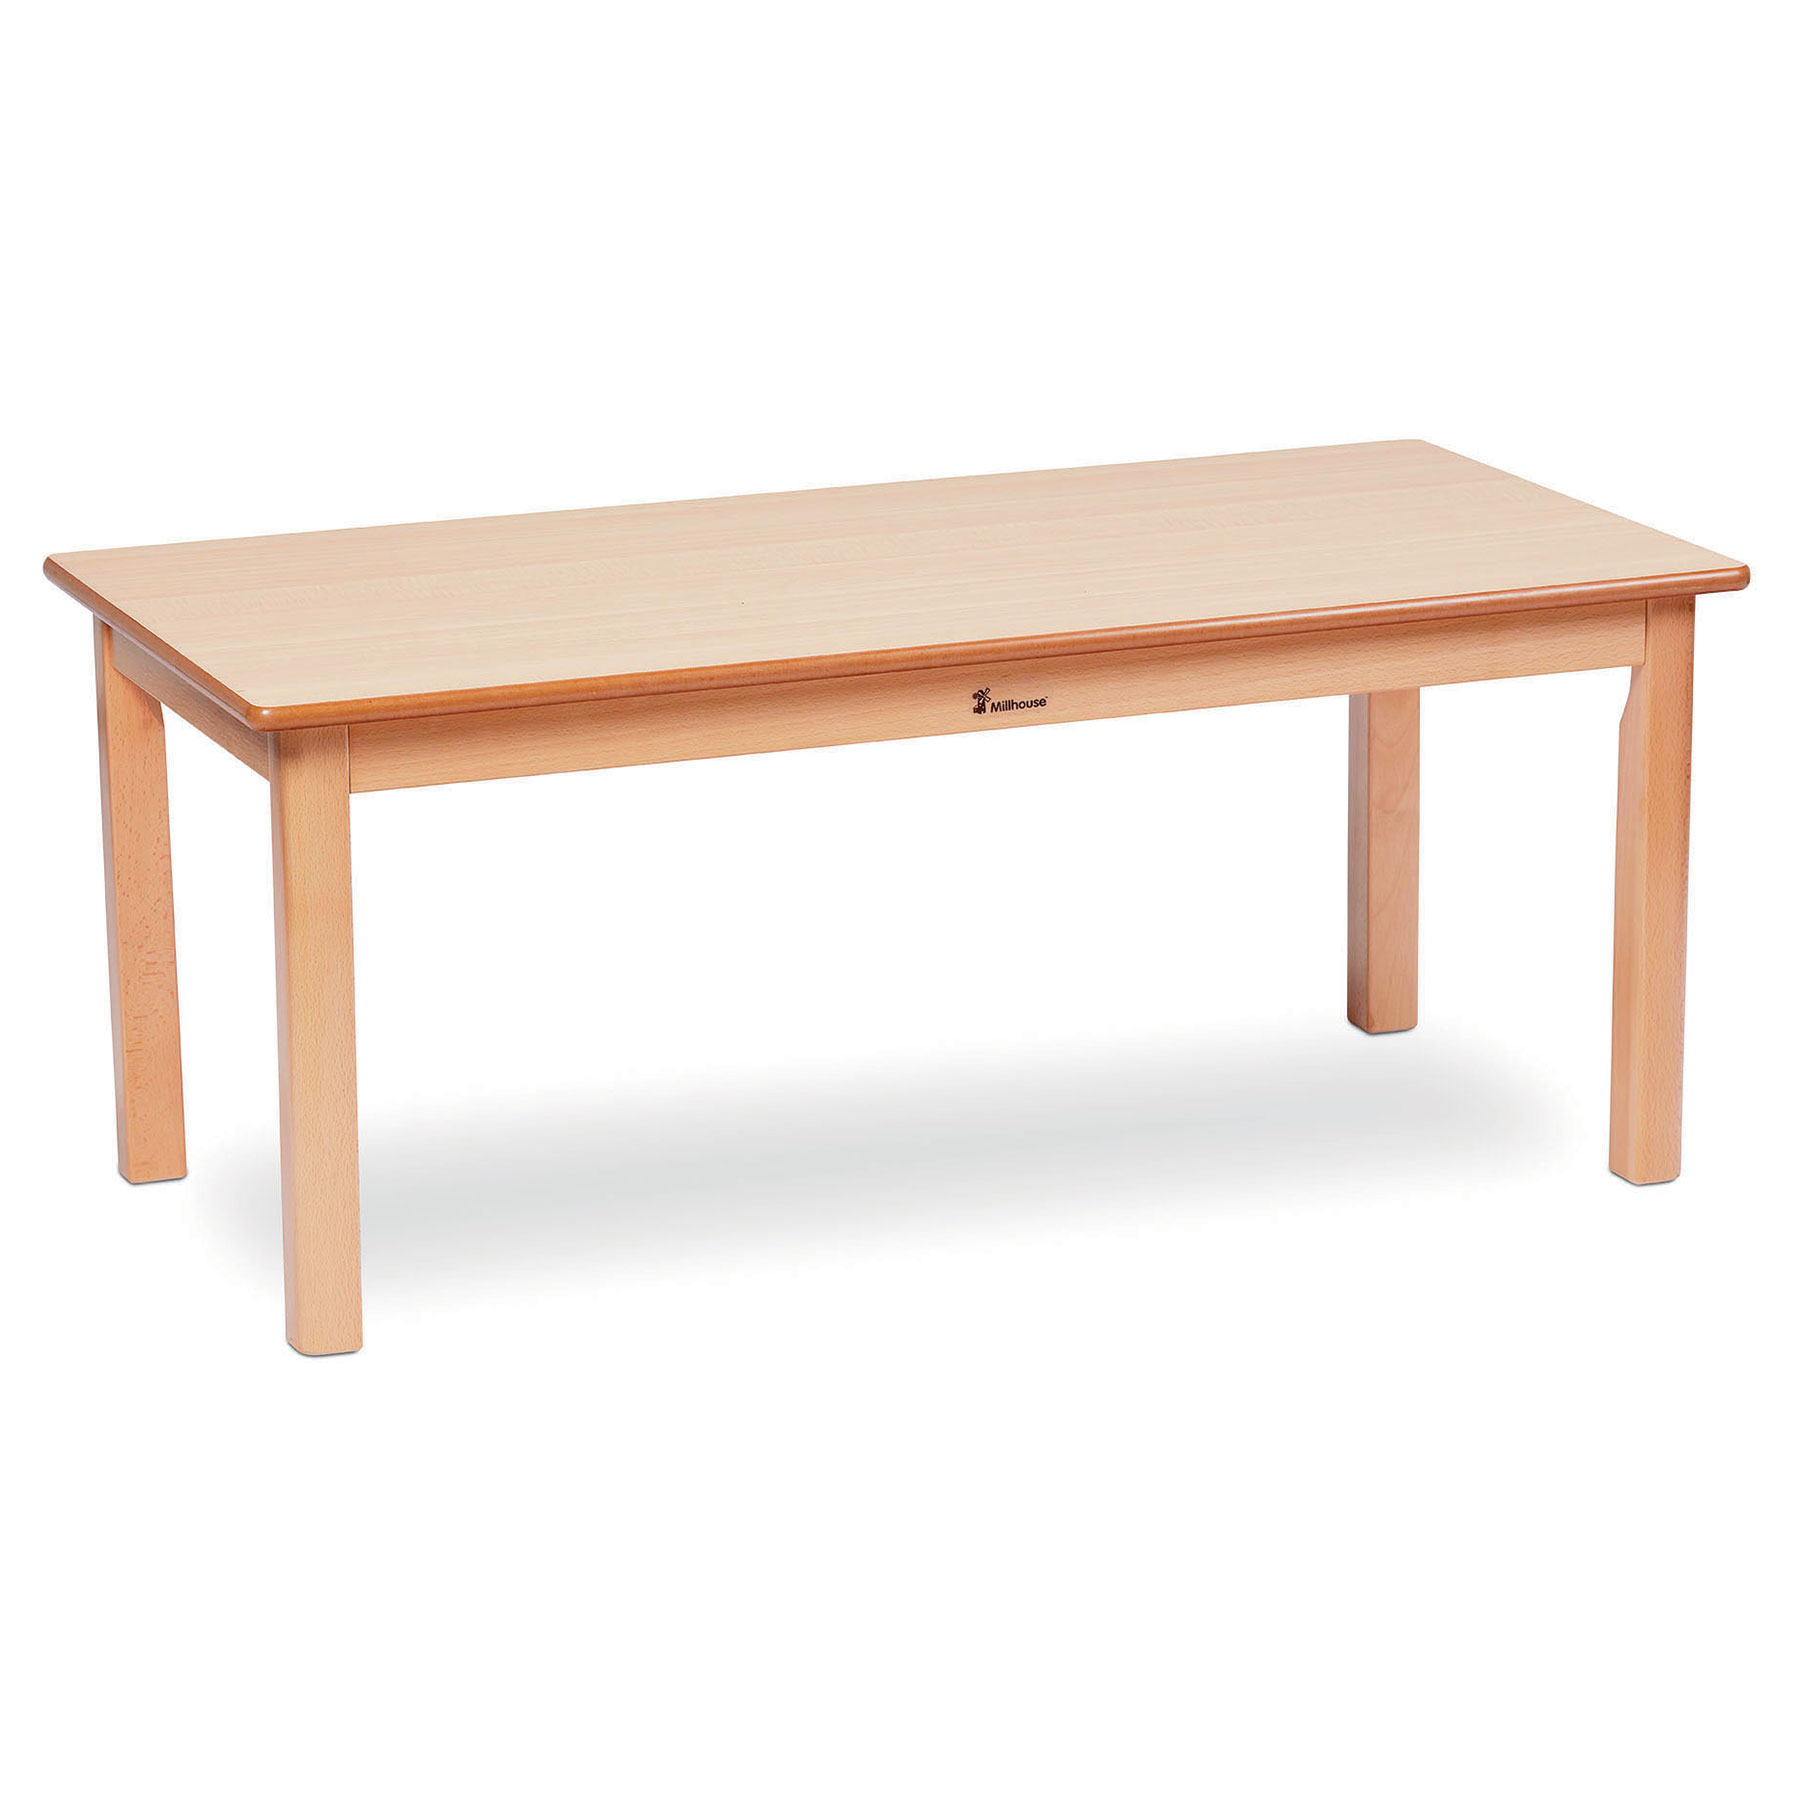 Beech Wood Rectangular Classroom Table